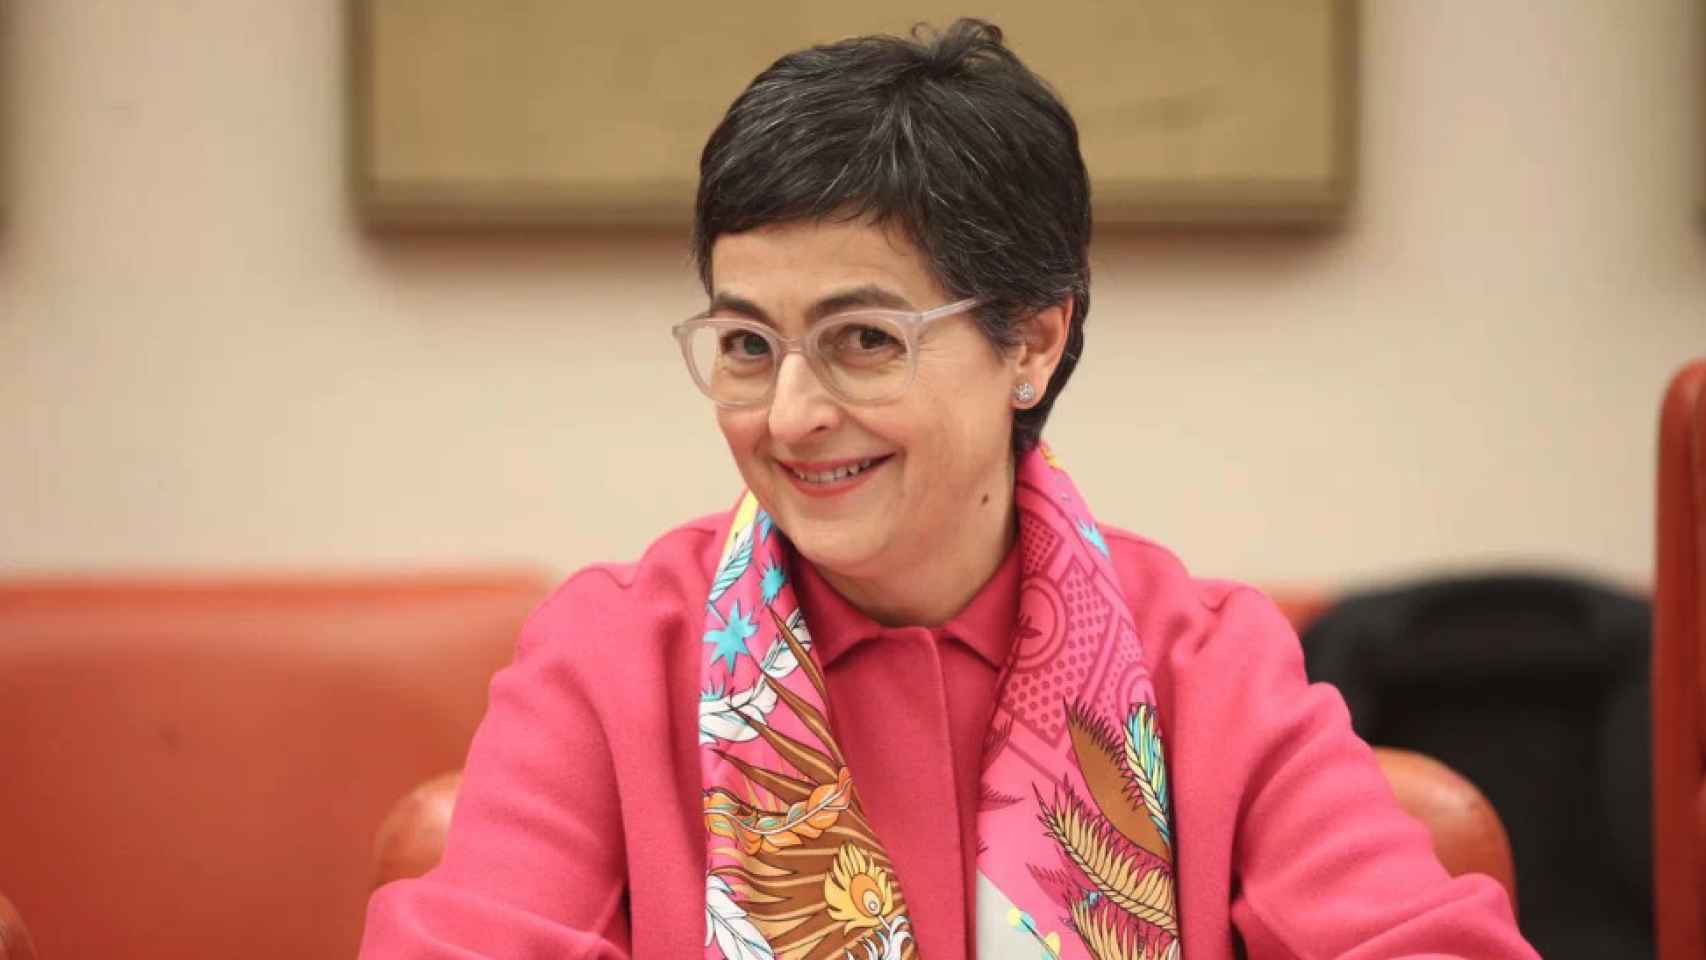 La ministra de Exteriores, Arancha González Laya, en una imagen de archivo.